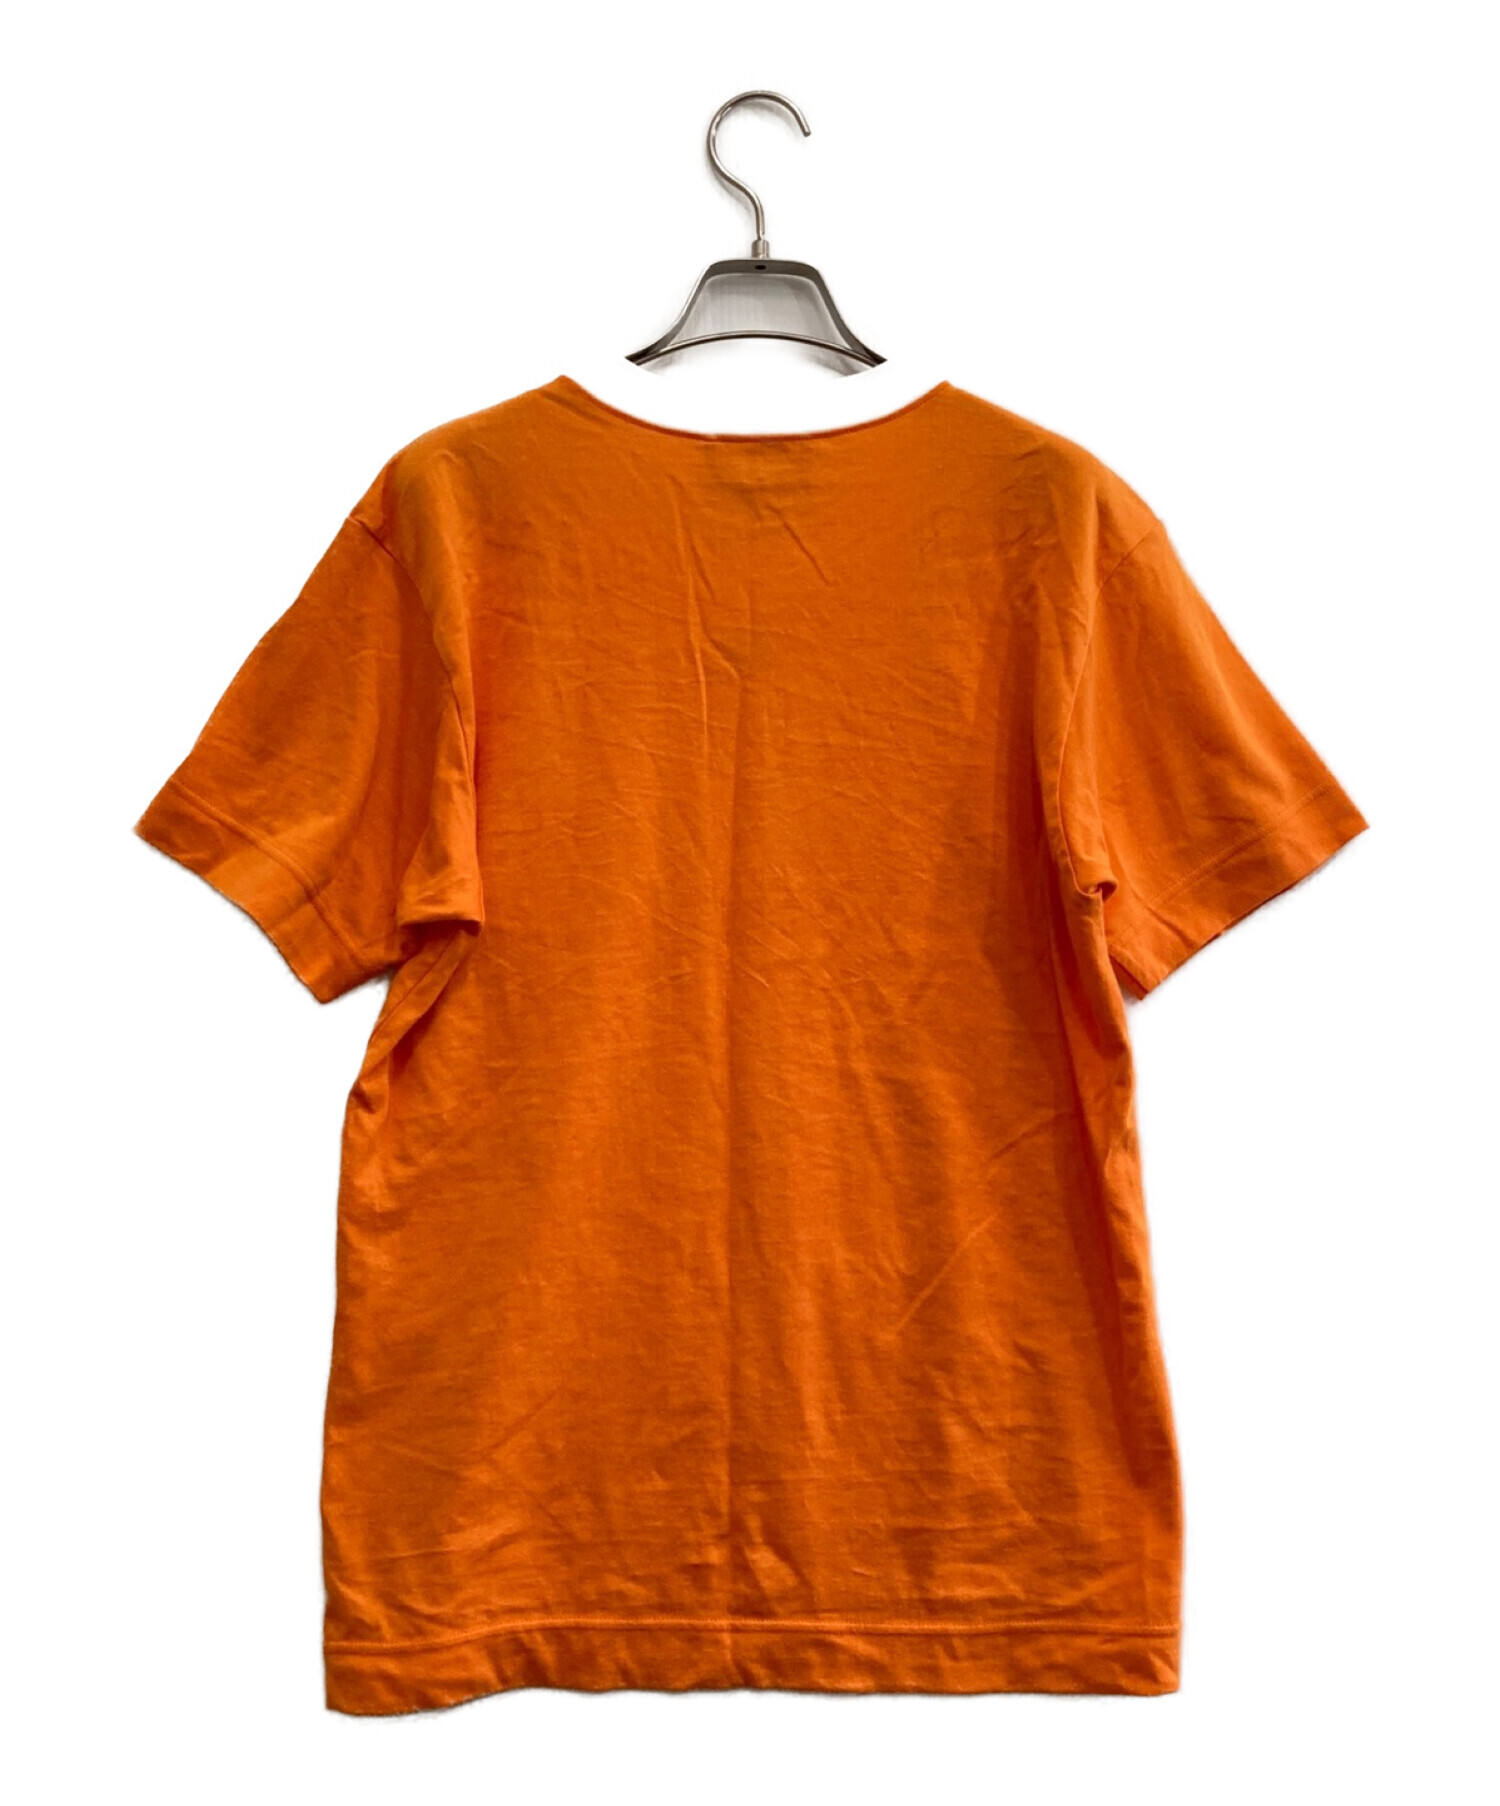 Vivienne Westwood man (ヴィヴィアン ウェストウッド マン) リンガーTシャツ オレンジ サイズ:42